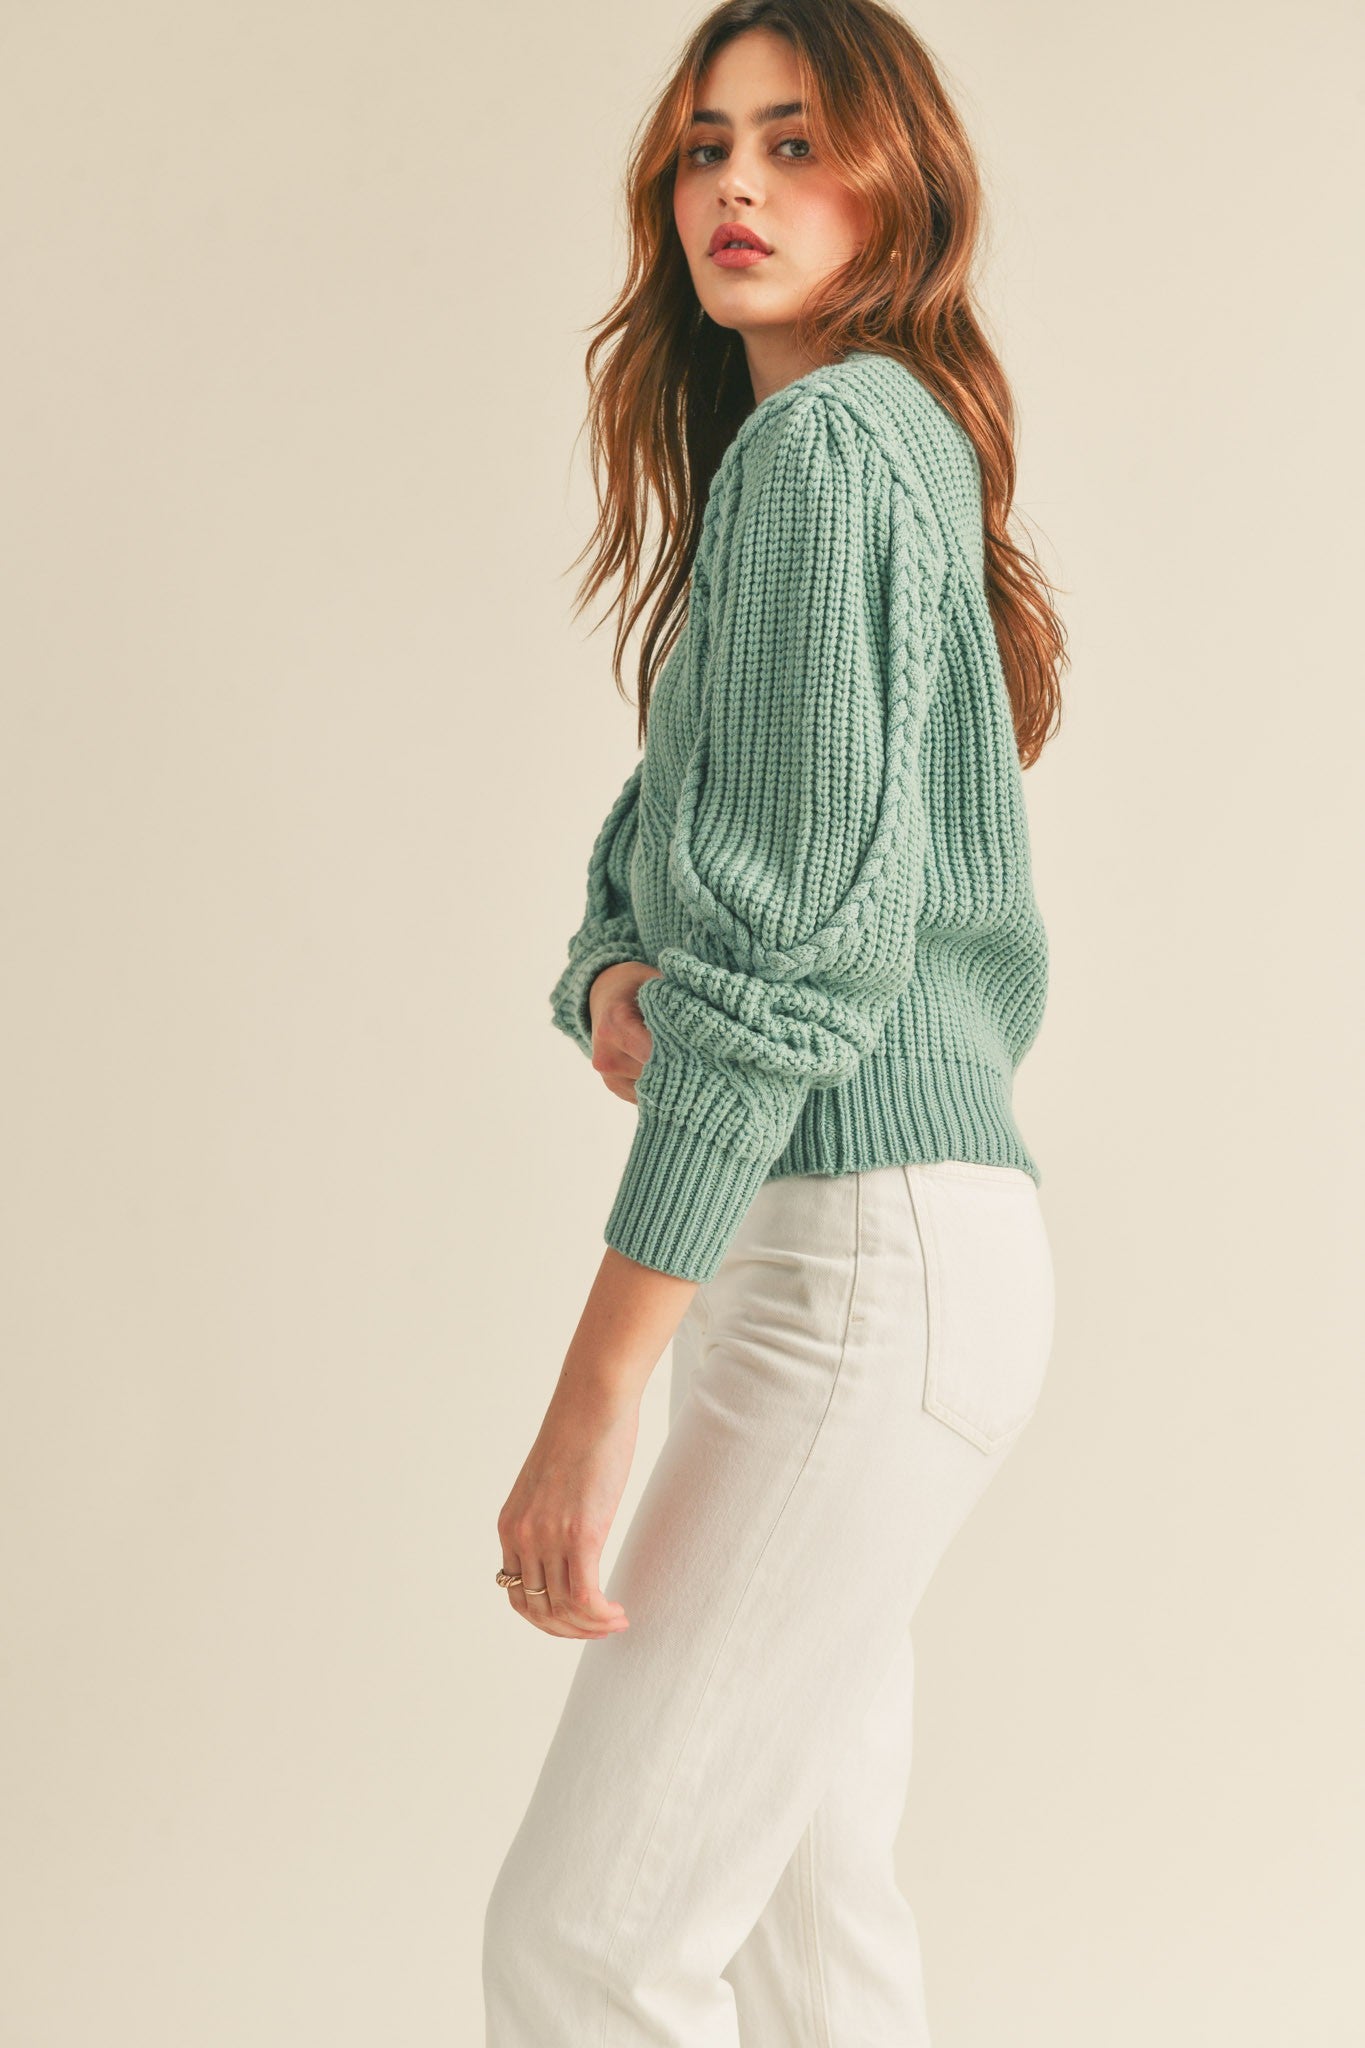 Rosemary Green Knit Sweater